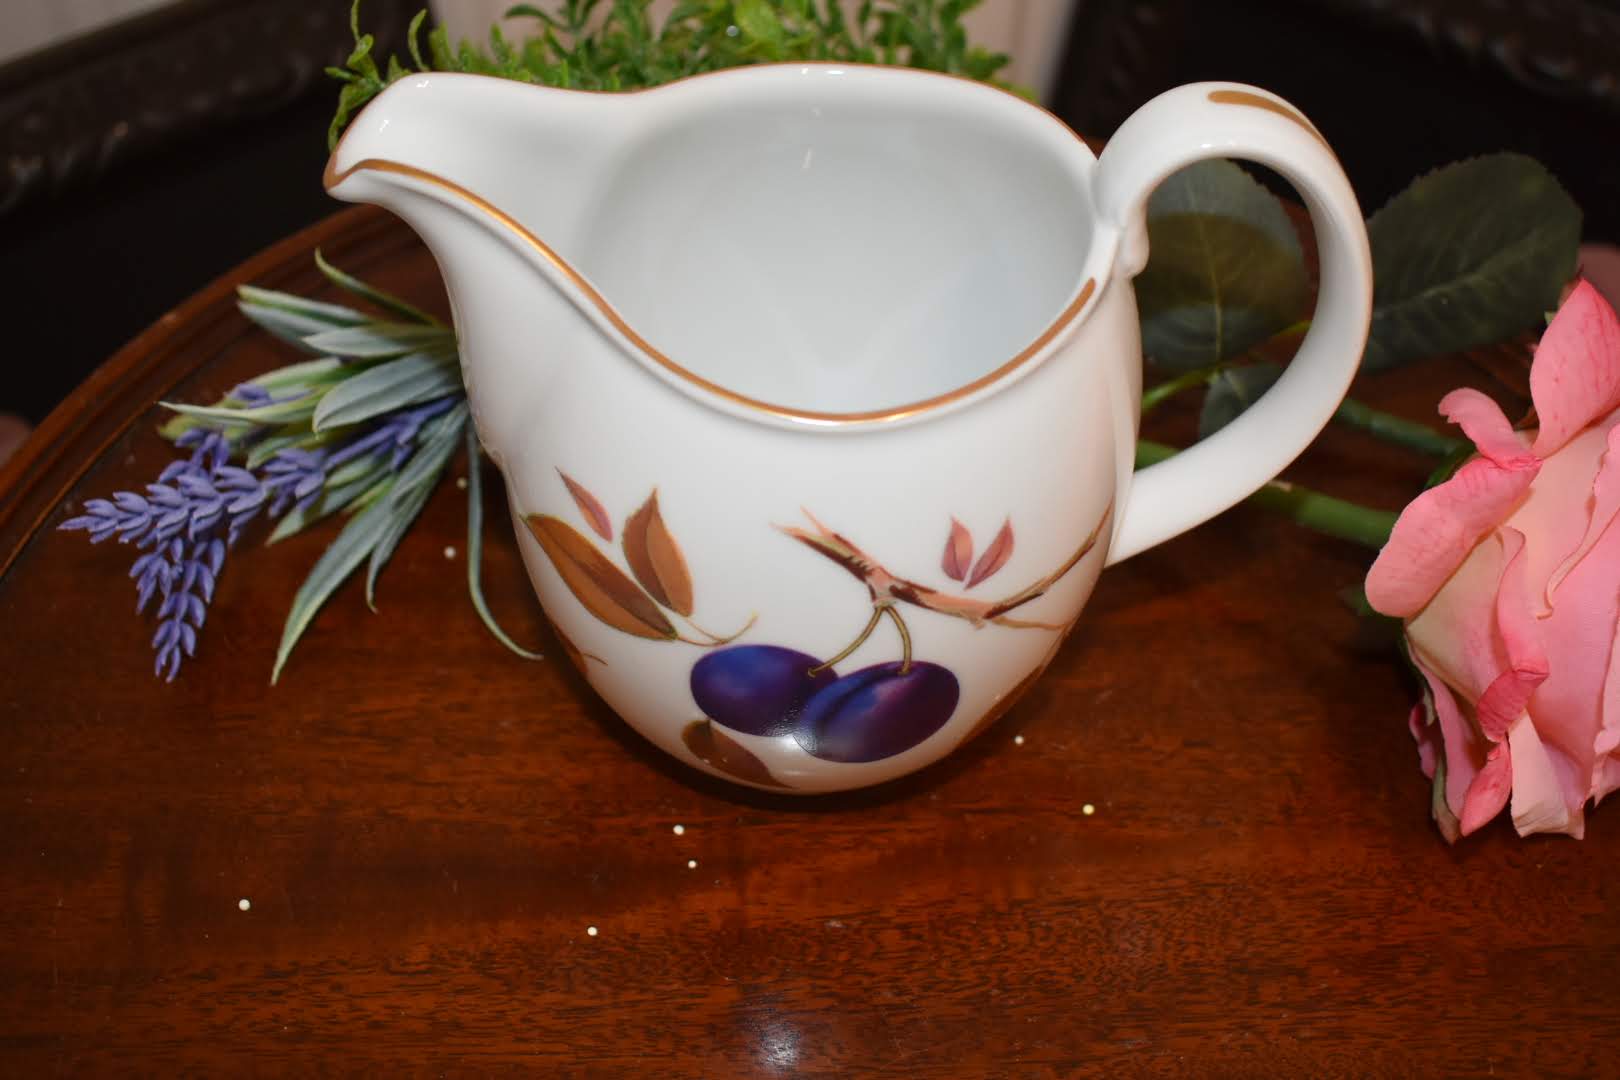 Royal Worchester Evesham - Fine Porcelain China - Gravy Bowl, Big Creamer - Gold Trim - From England